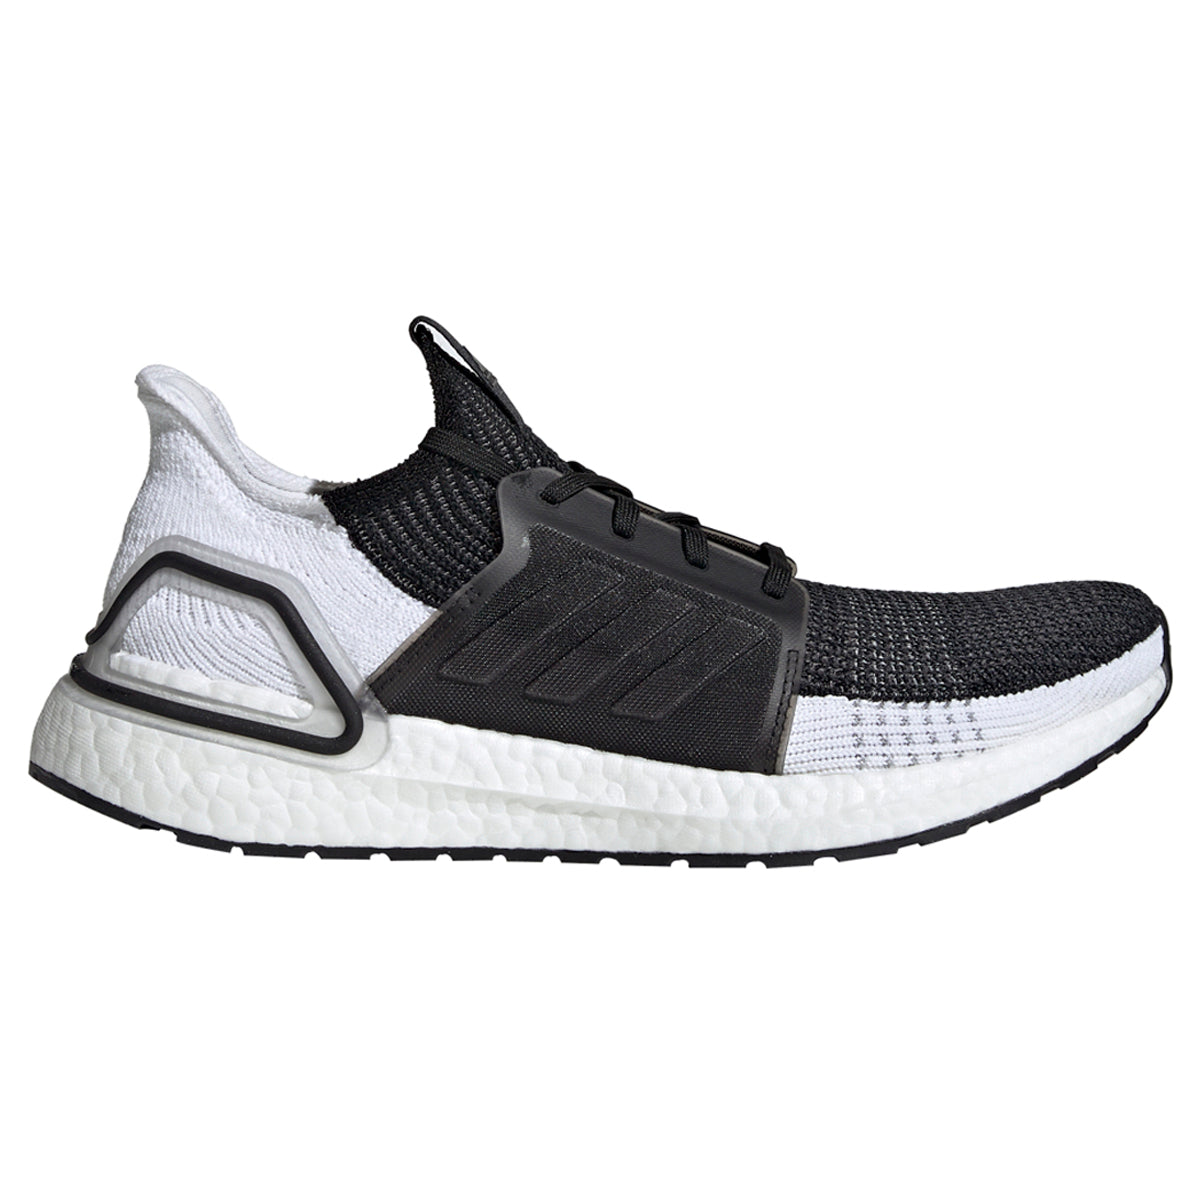 Adidas Ultra Boost 2019 Running Shoe - Black White - B37704 Sporting Goods